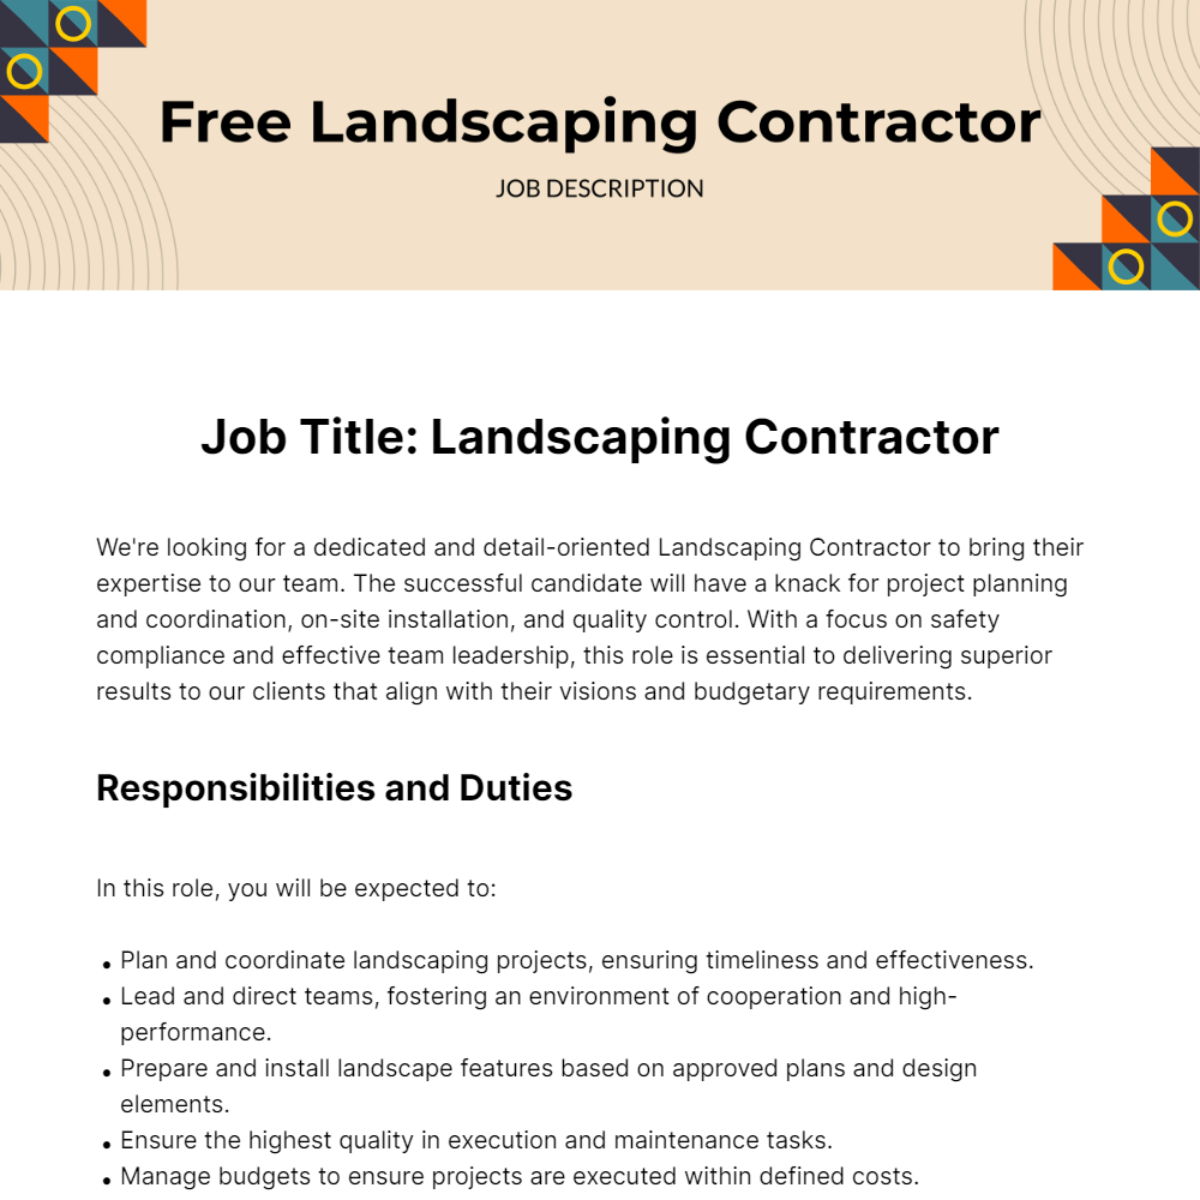 Free Landscaping Contractor Job Description Template